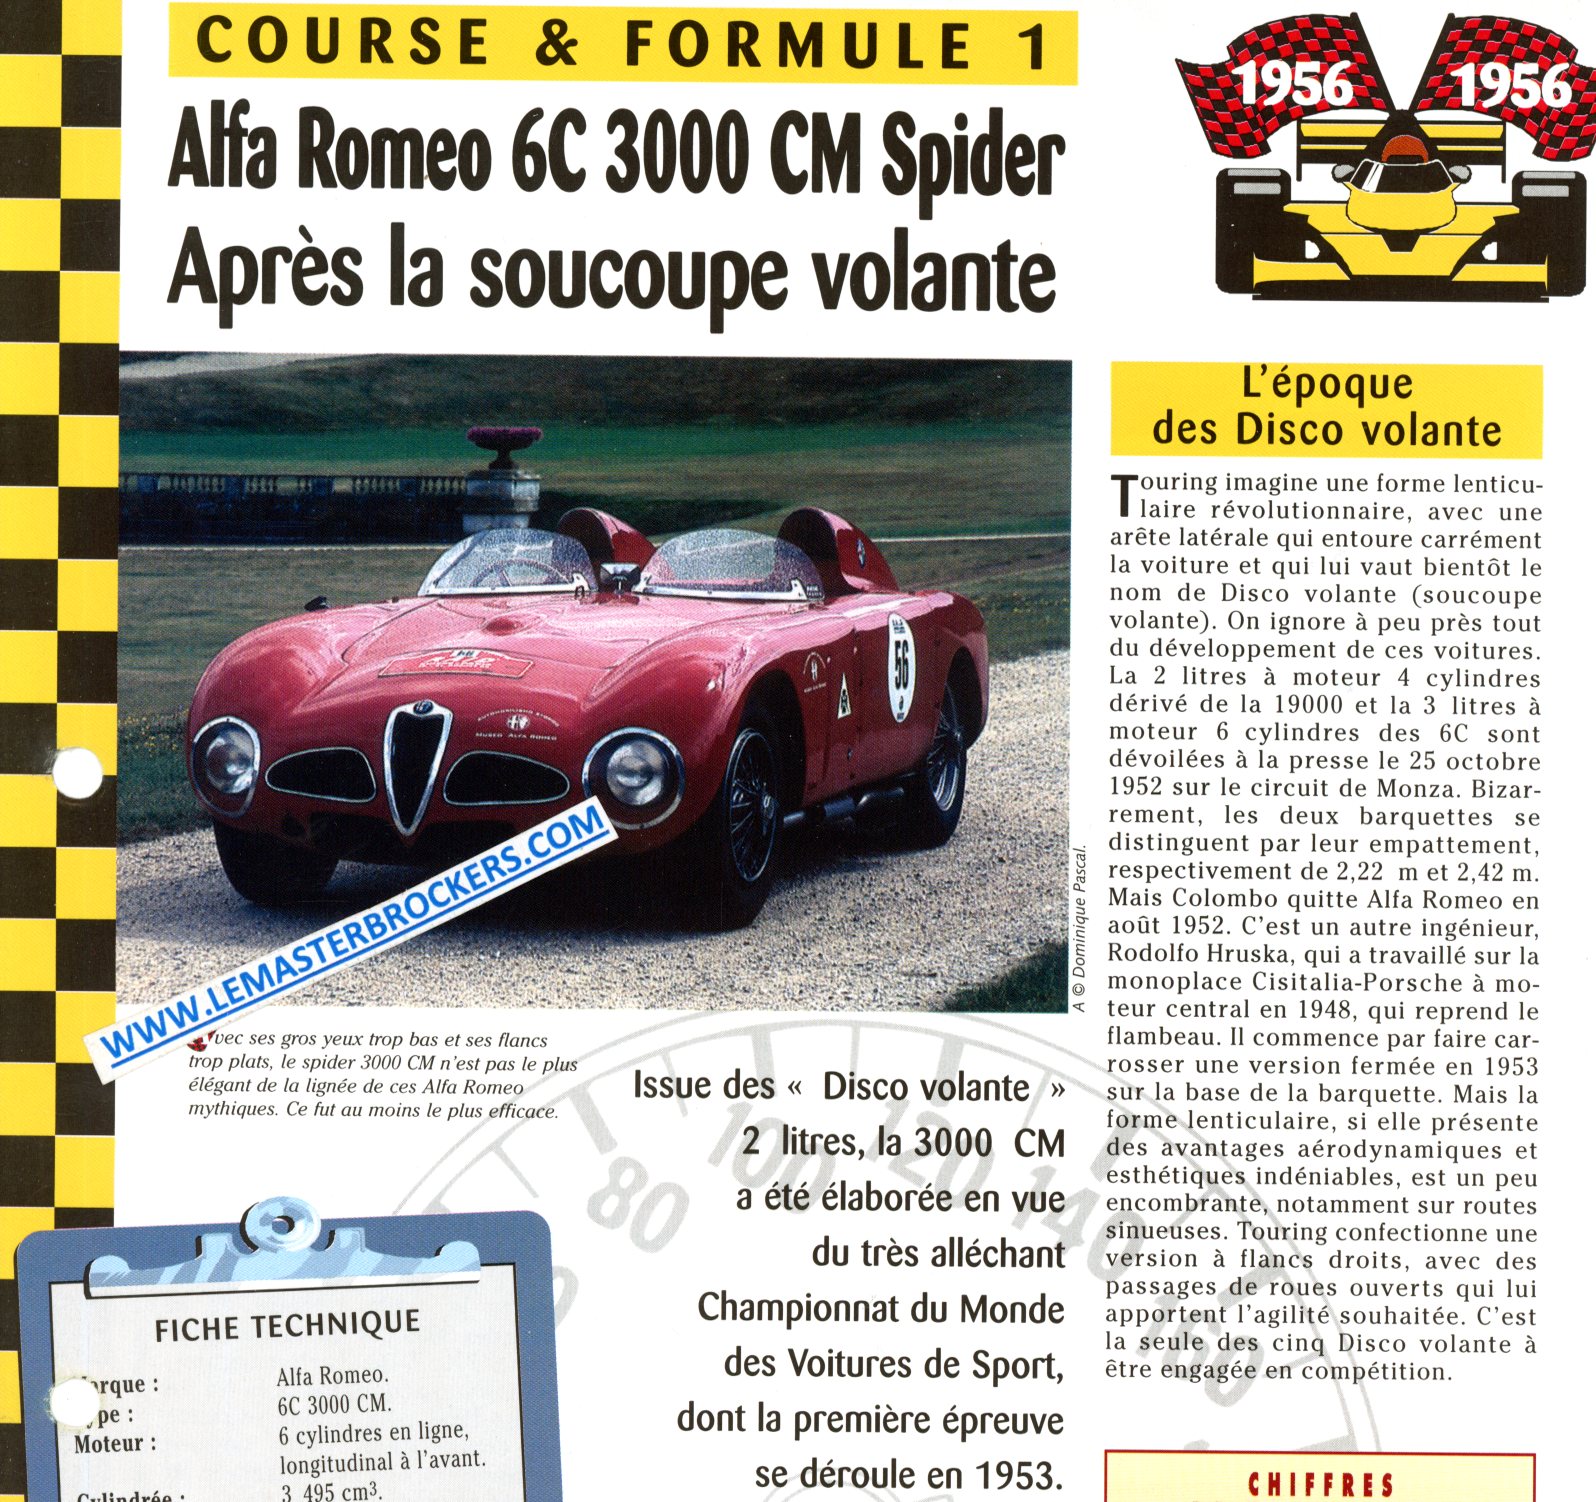 ALFA ROMEO 6C 3000 CM SPIDER - FICHE COURSE ET FORMULE 1 1956